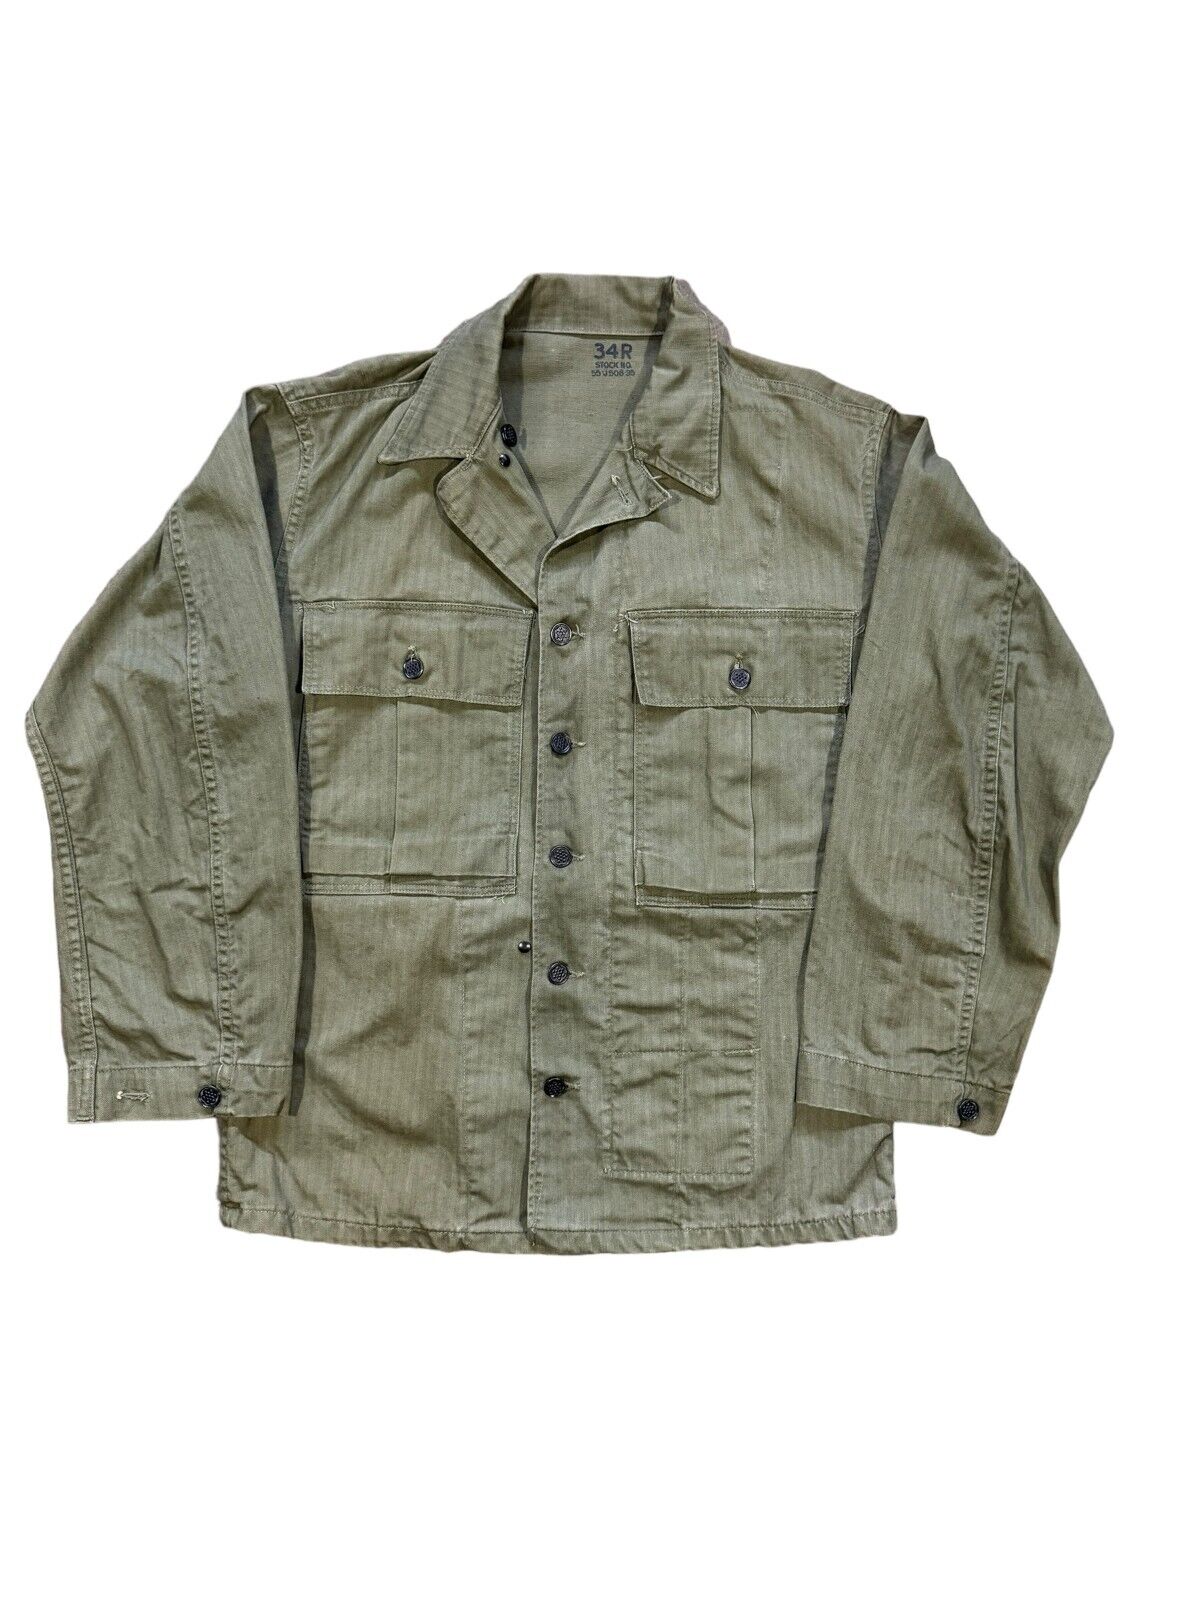 Vintage 1940s WW2 HBT OD-7 Special Pattern Jacket Williamson-Dickie Size 34r